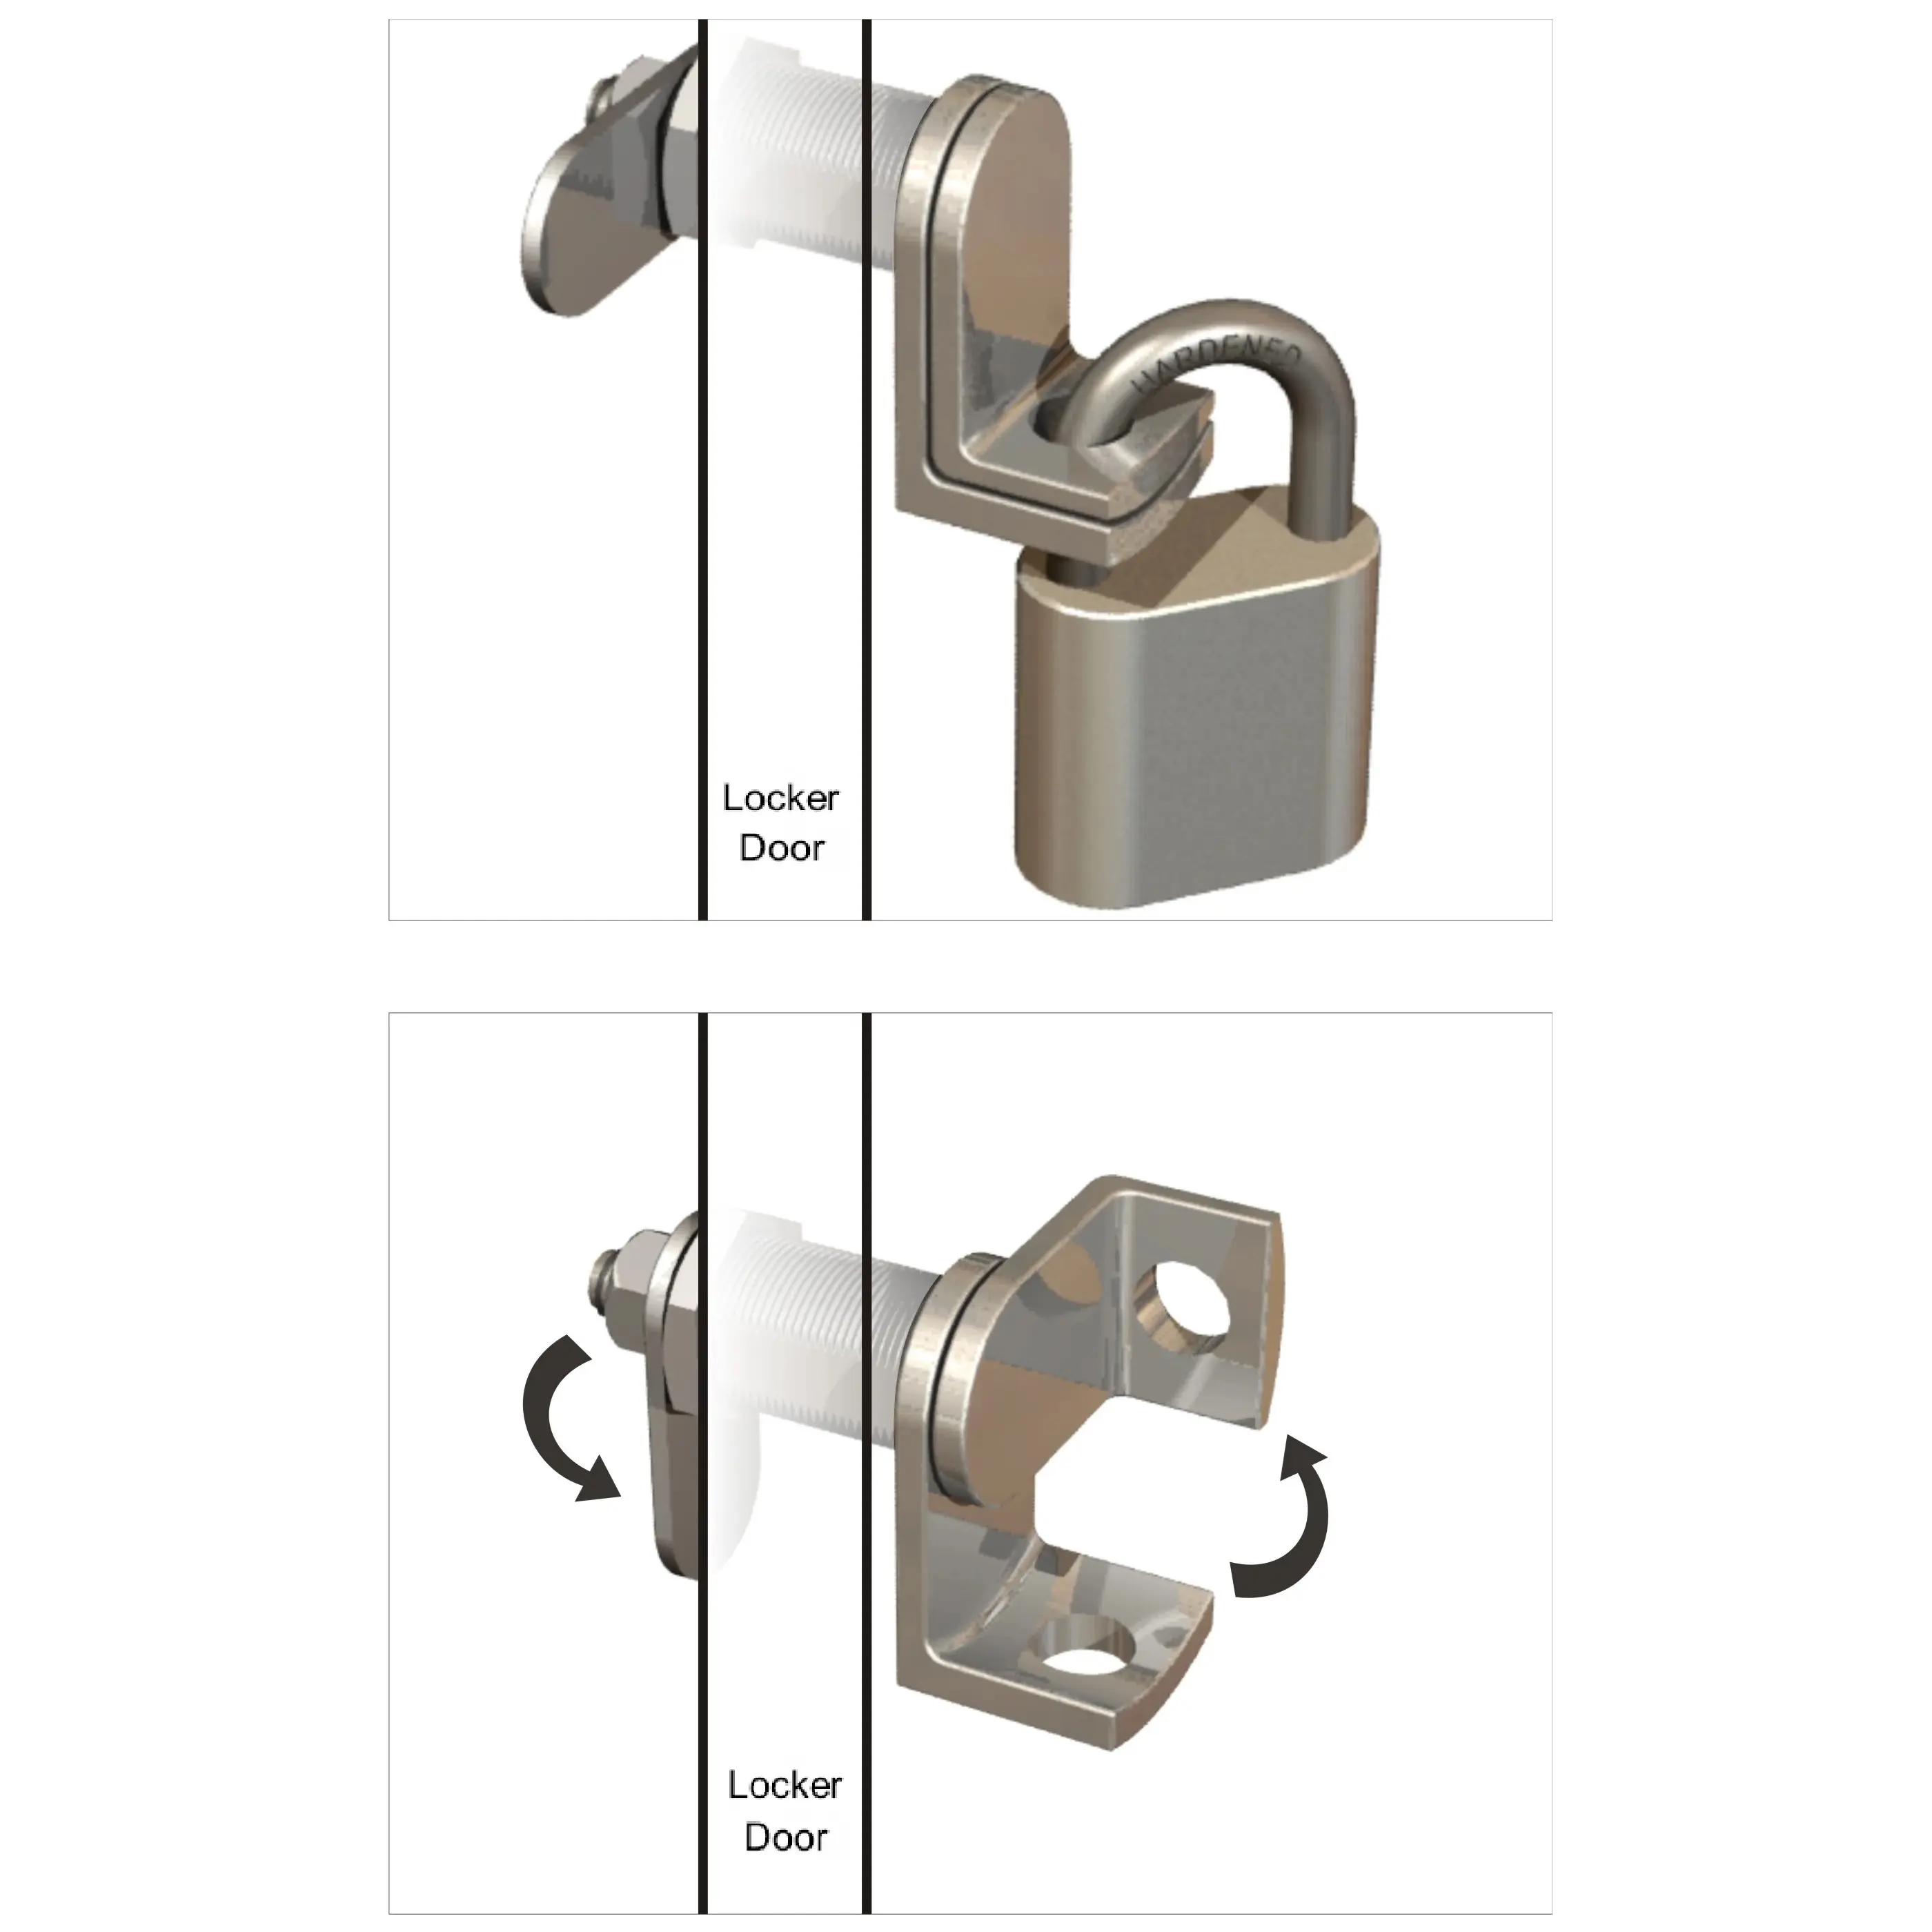 REAL RL-8051 Hasp Cam Lock  Hasp and Staple Cam Locker Lock work with padlocks